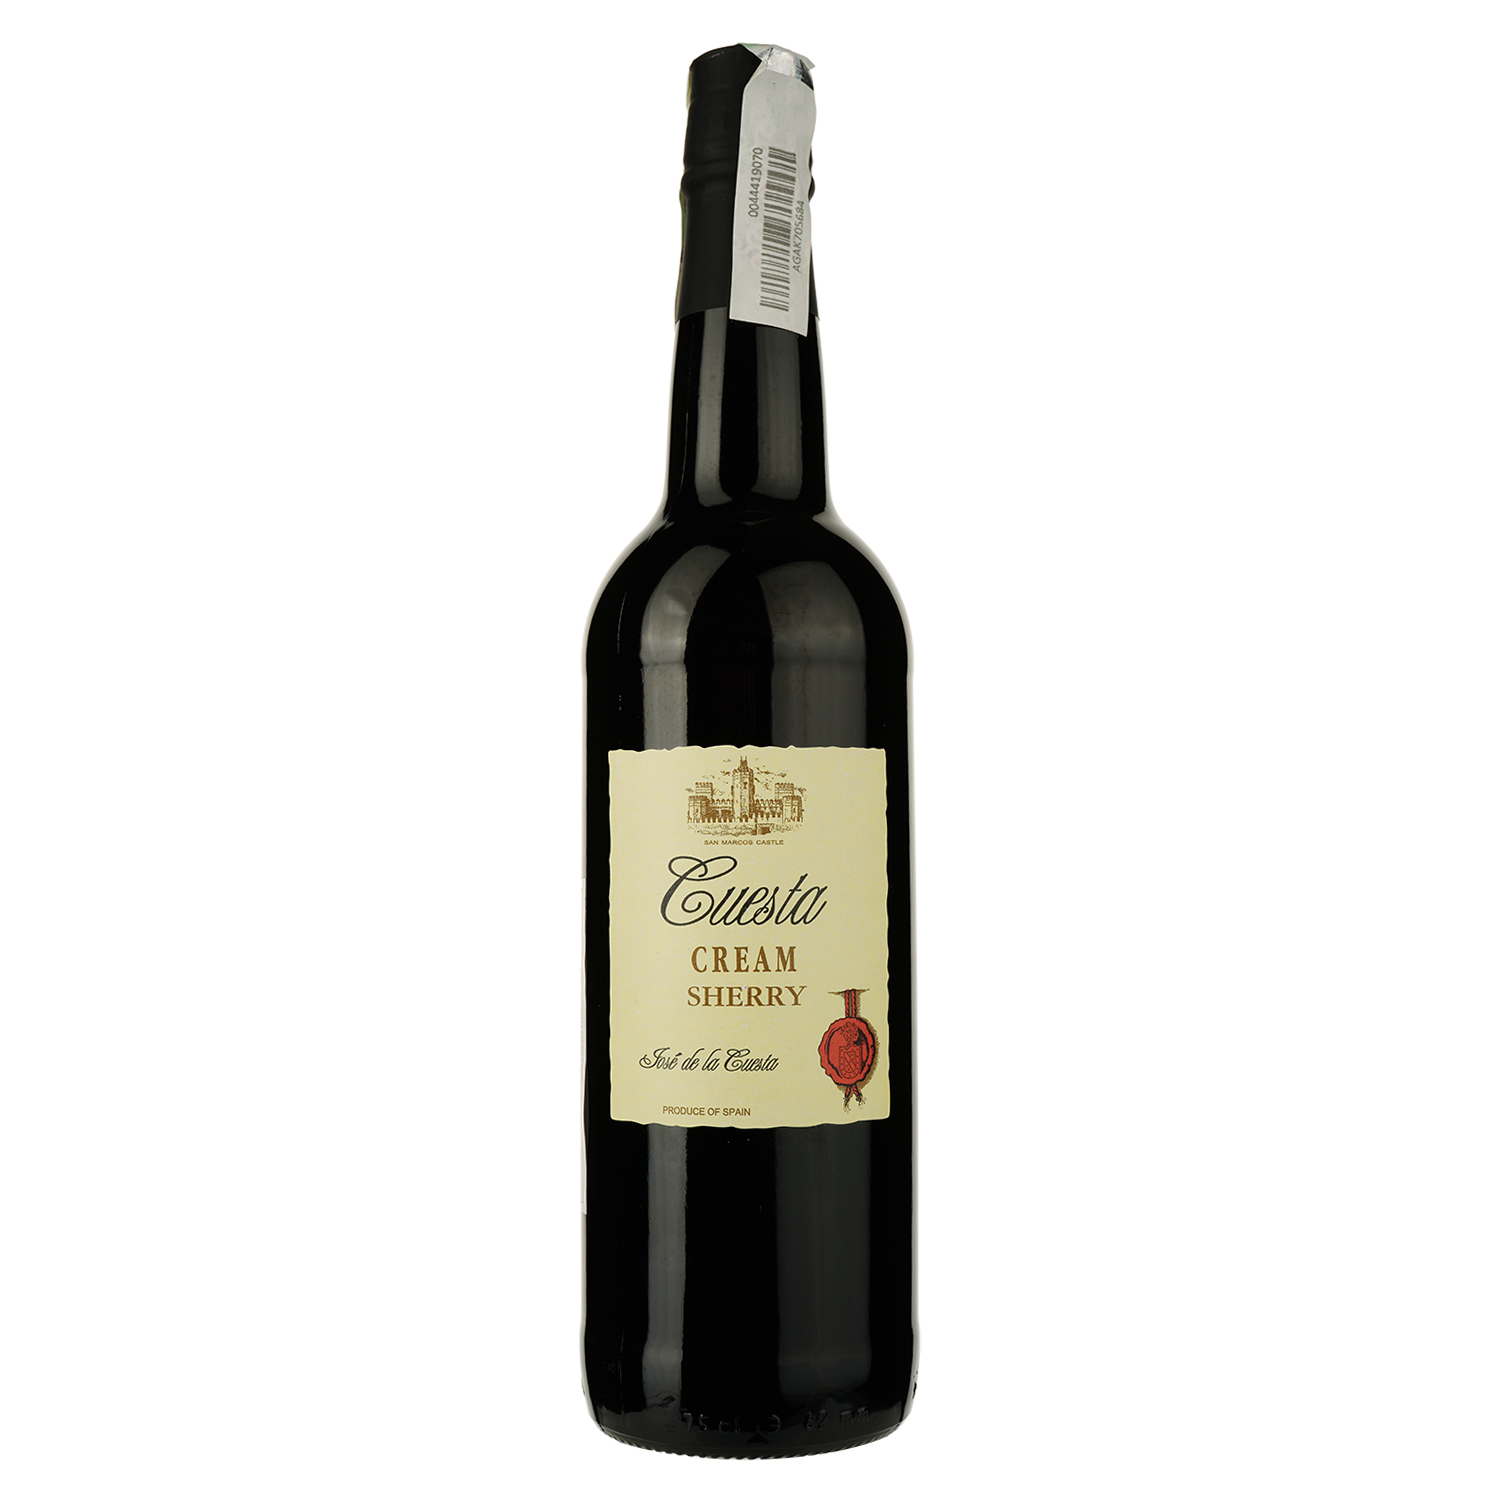 Вино Luis Caballero Cuesta Cream Sherry, біле, солодке, 0,75 л - фото 1